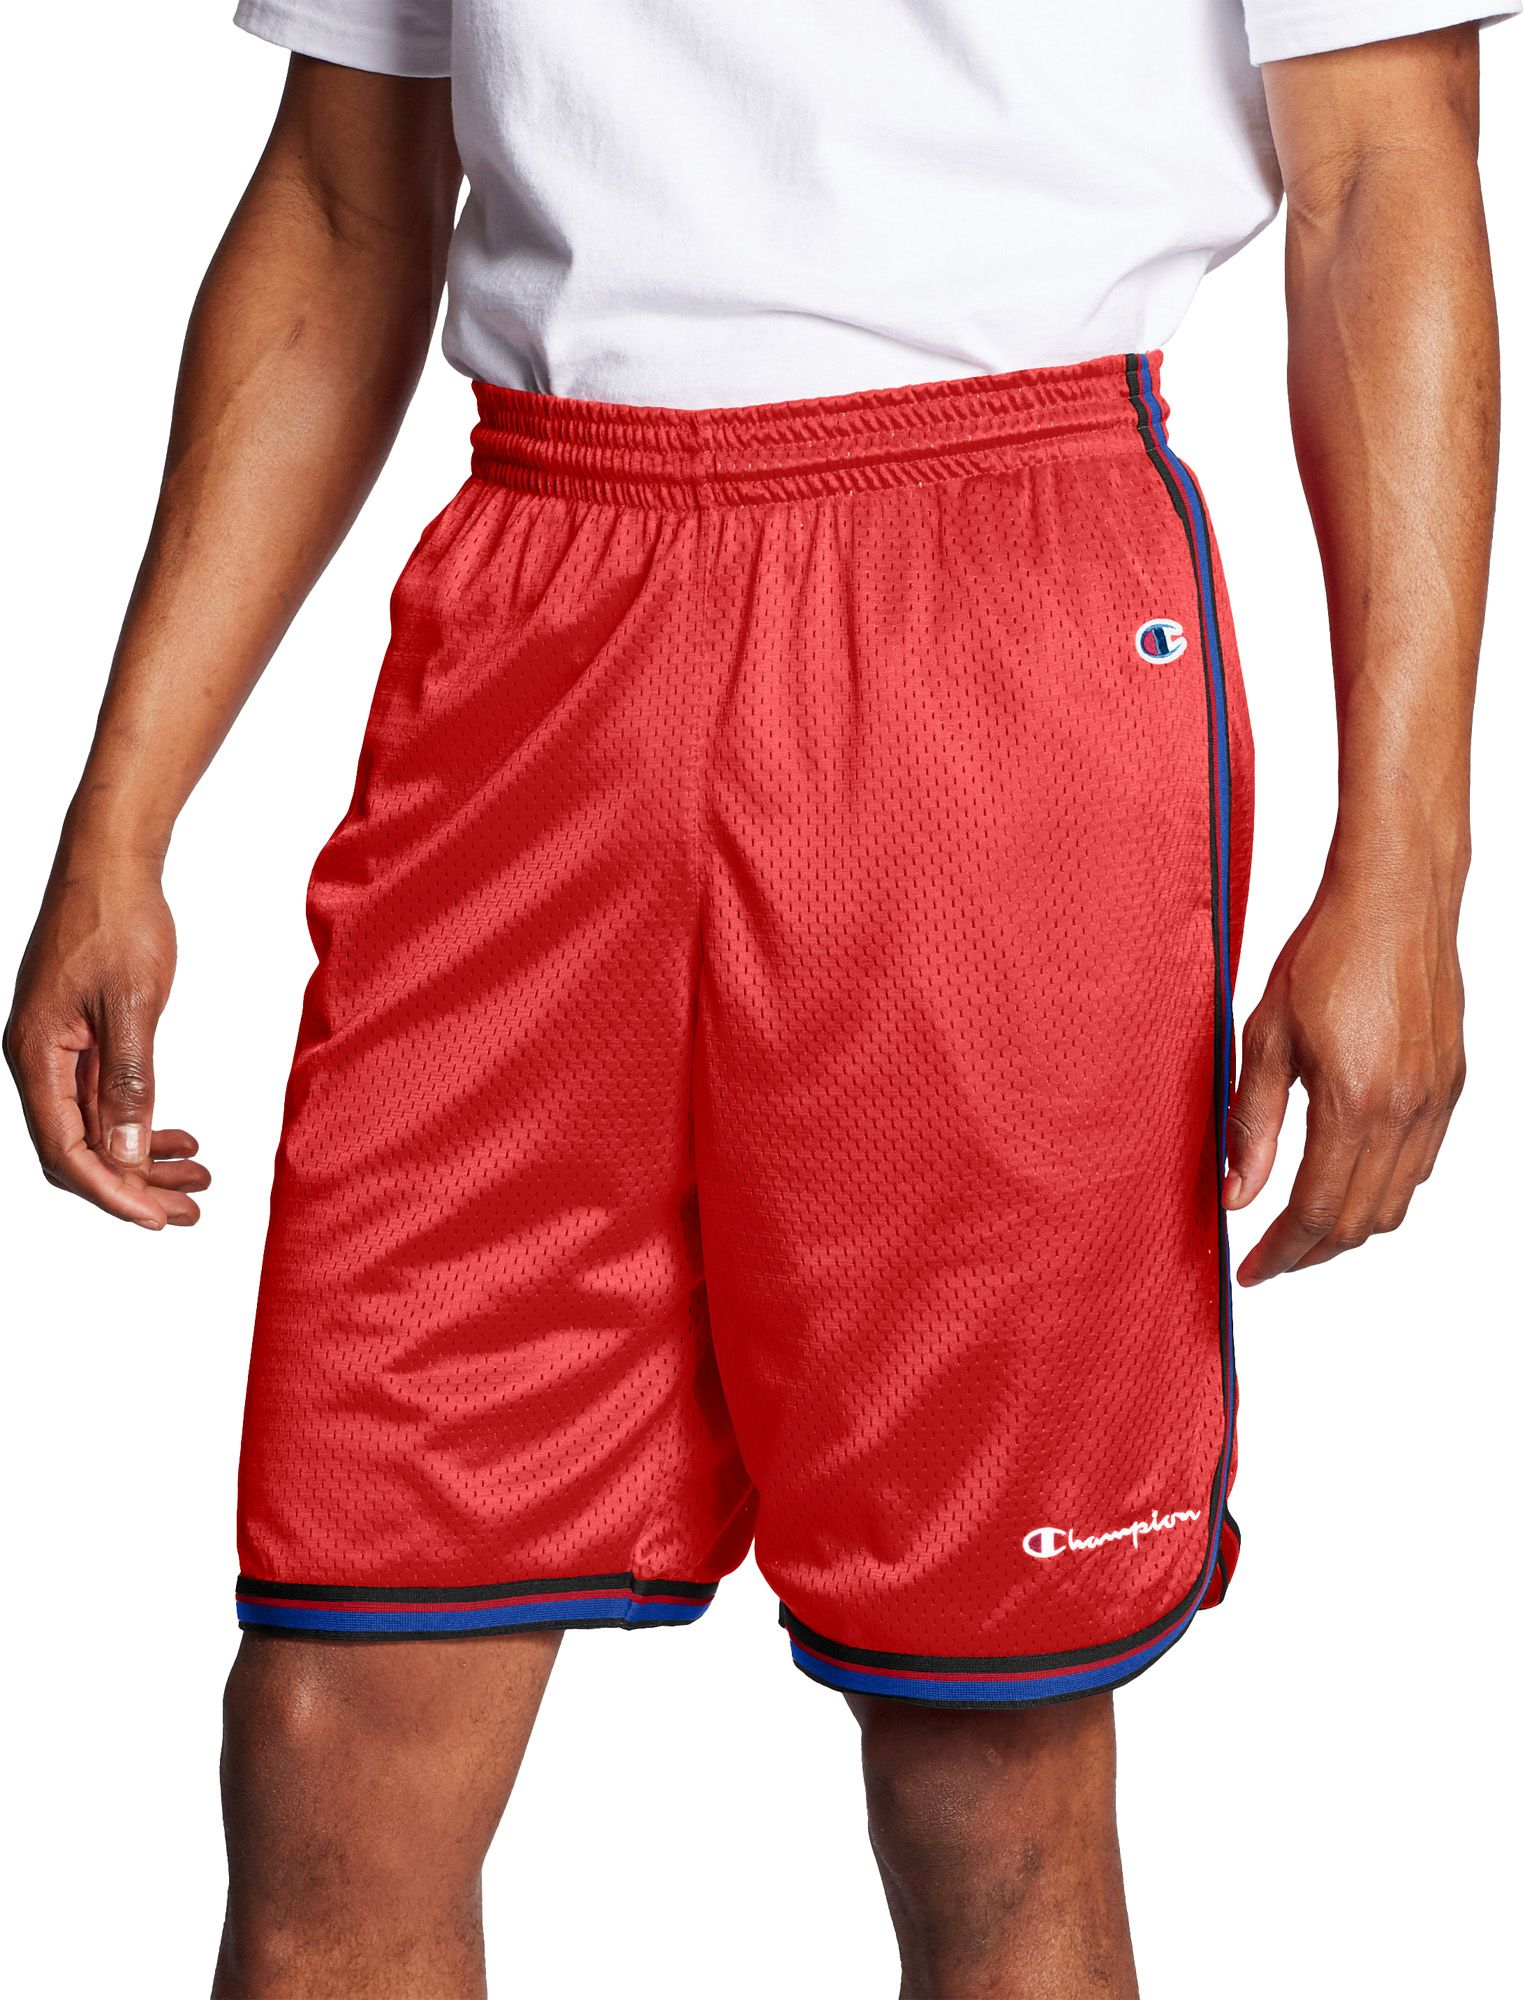 red champion basketball shorts